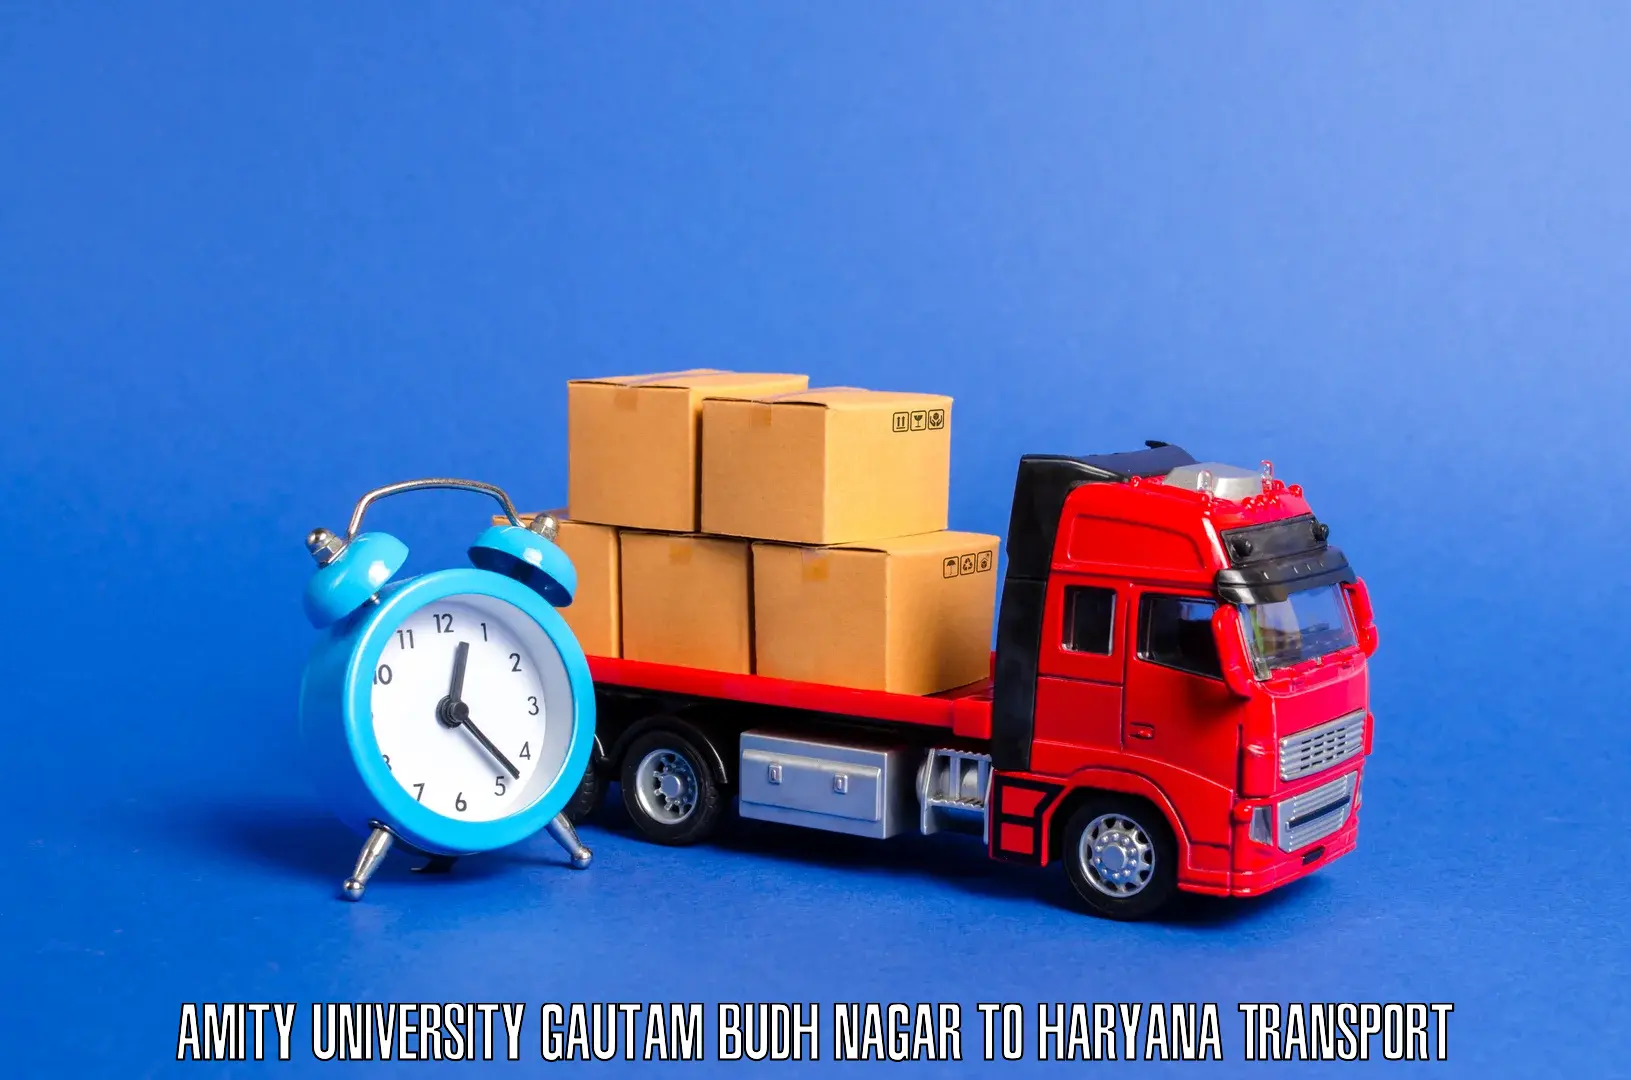 Land transport services in Amity University Gautam Budh Nagar to Fatehabad